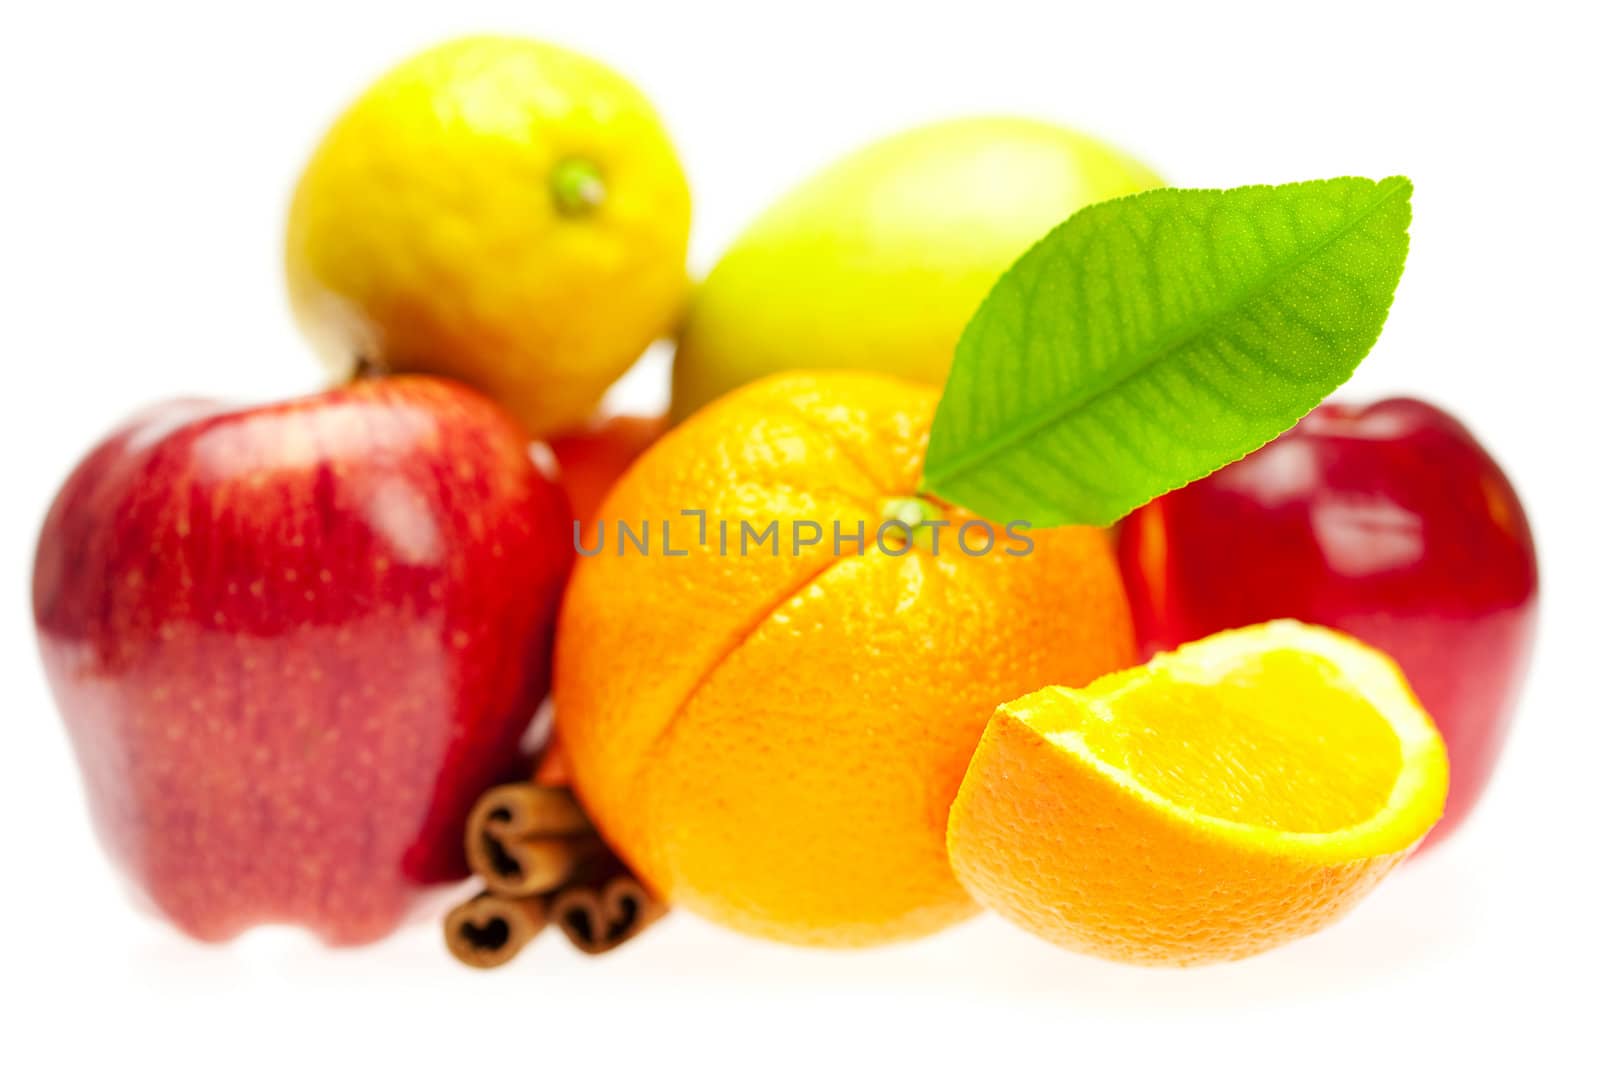 apple, orange, lemon and cinnamon, isolated on white by jannyjus